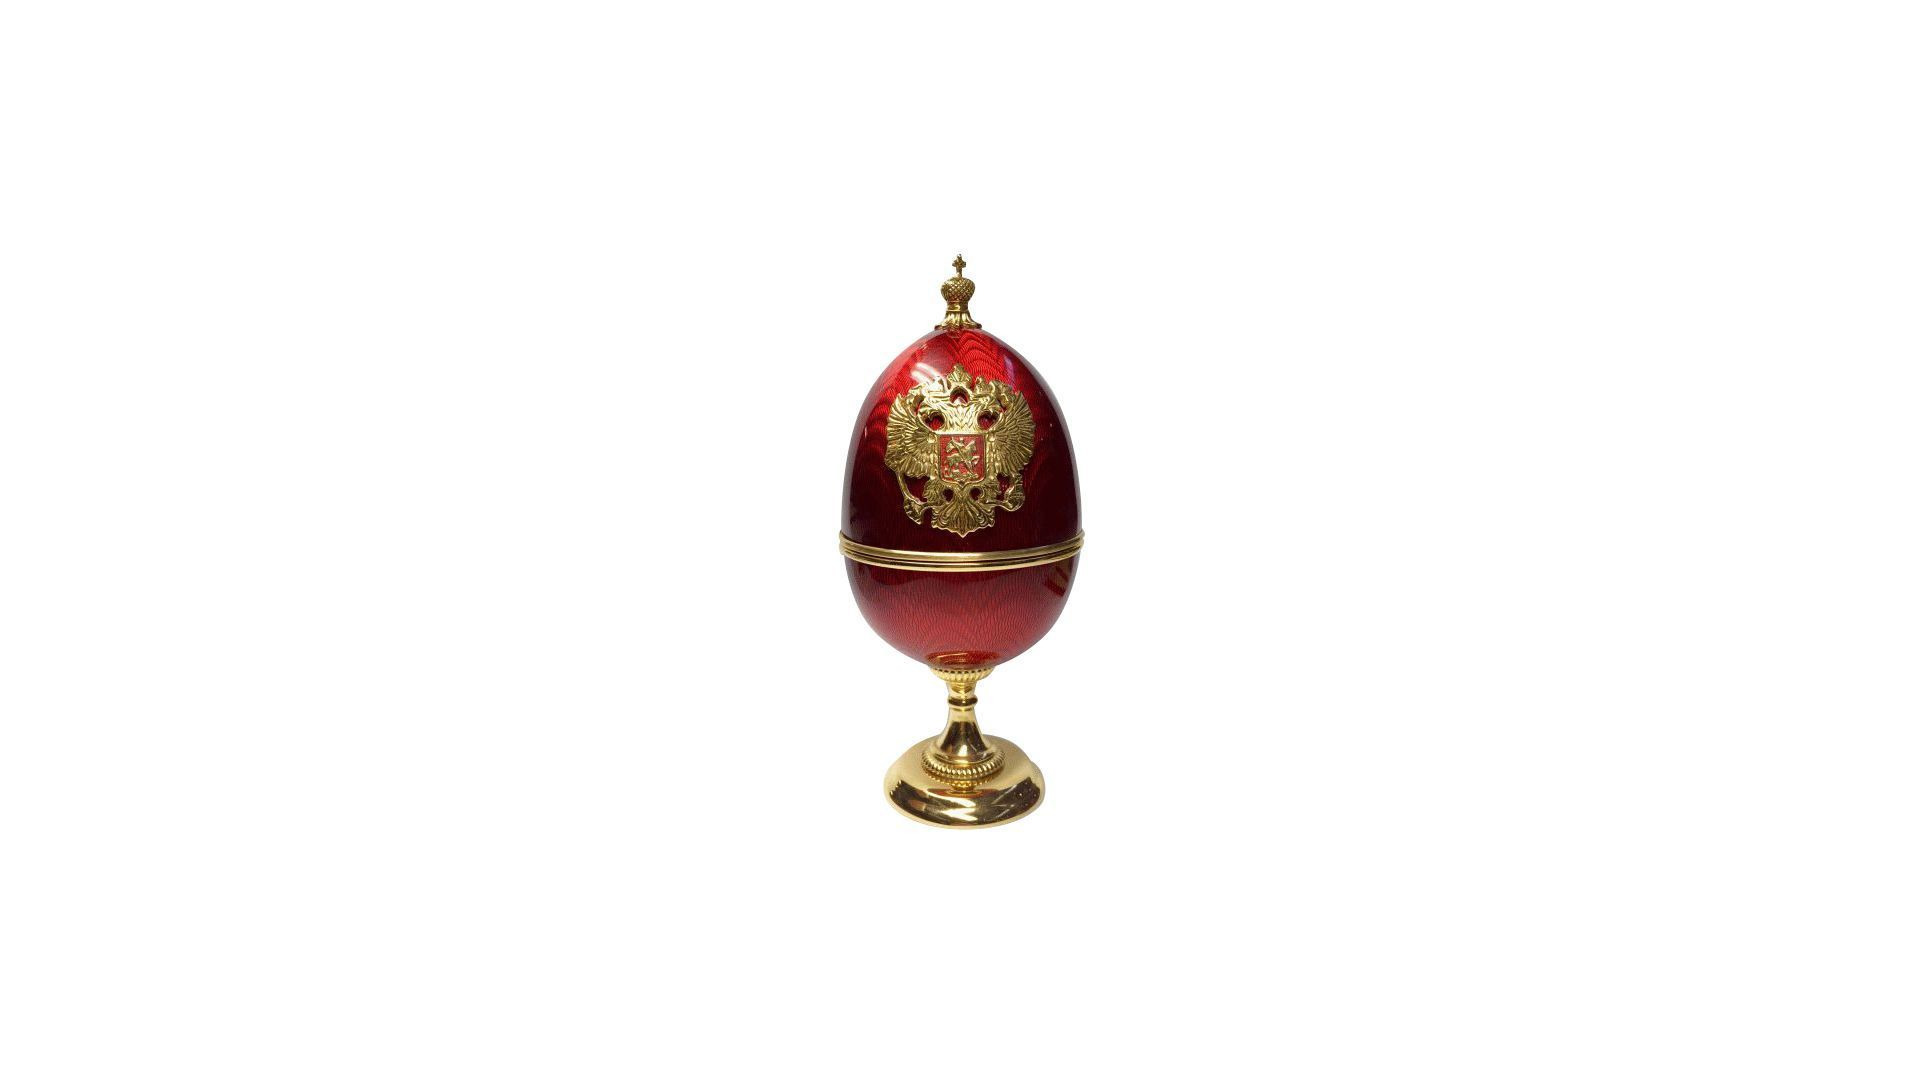 Шкатулка-яйцо Русские самоцветы Занавески 6см, серебро 925, позолота